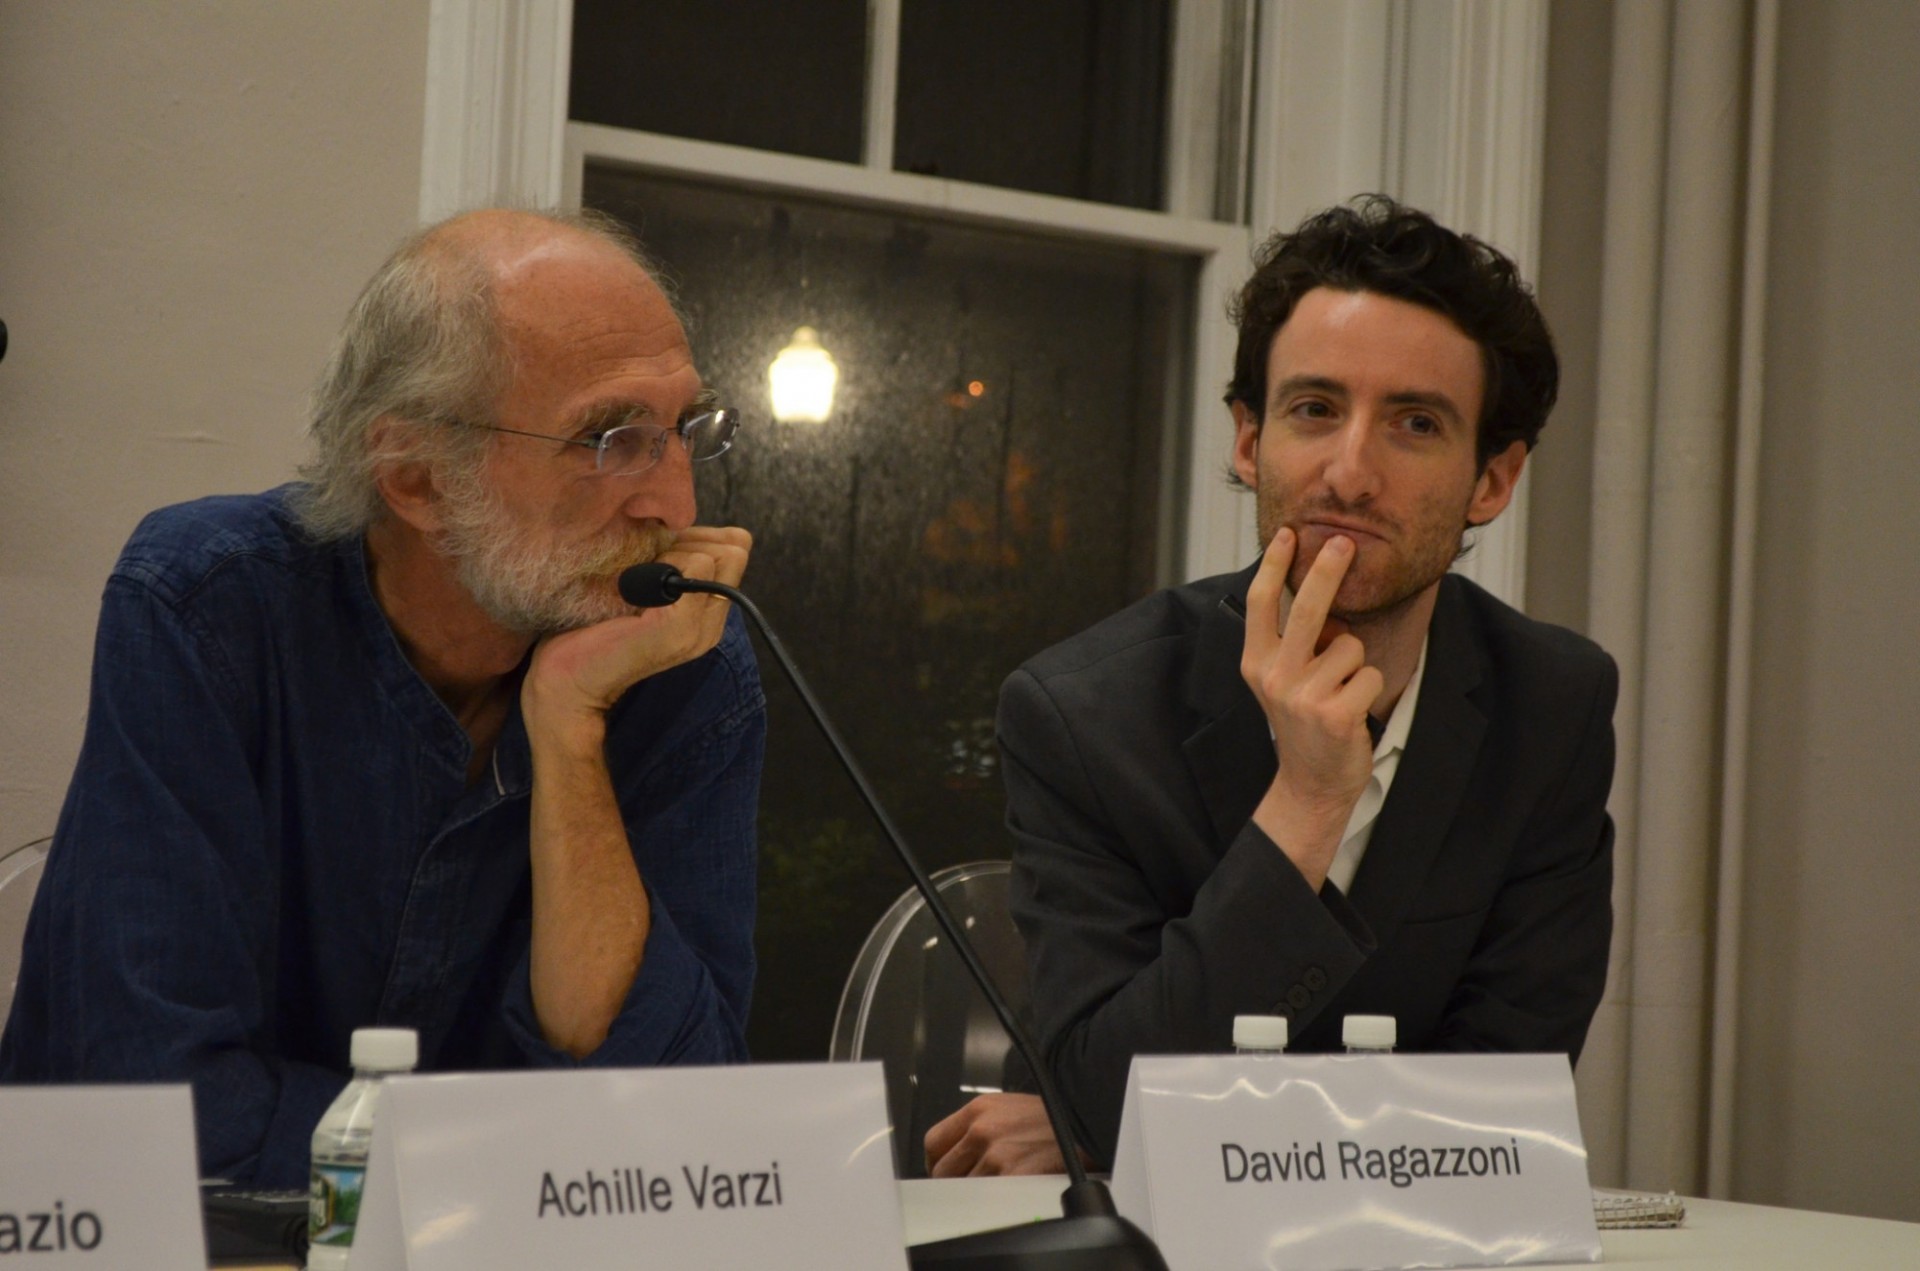 Panelists Achille Varzi and David Ragazzoni